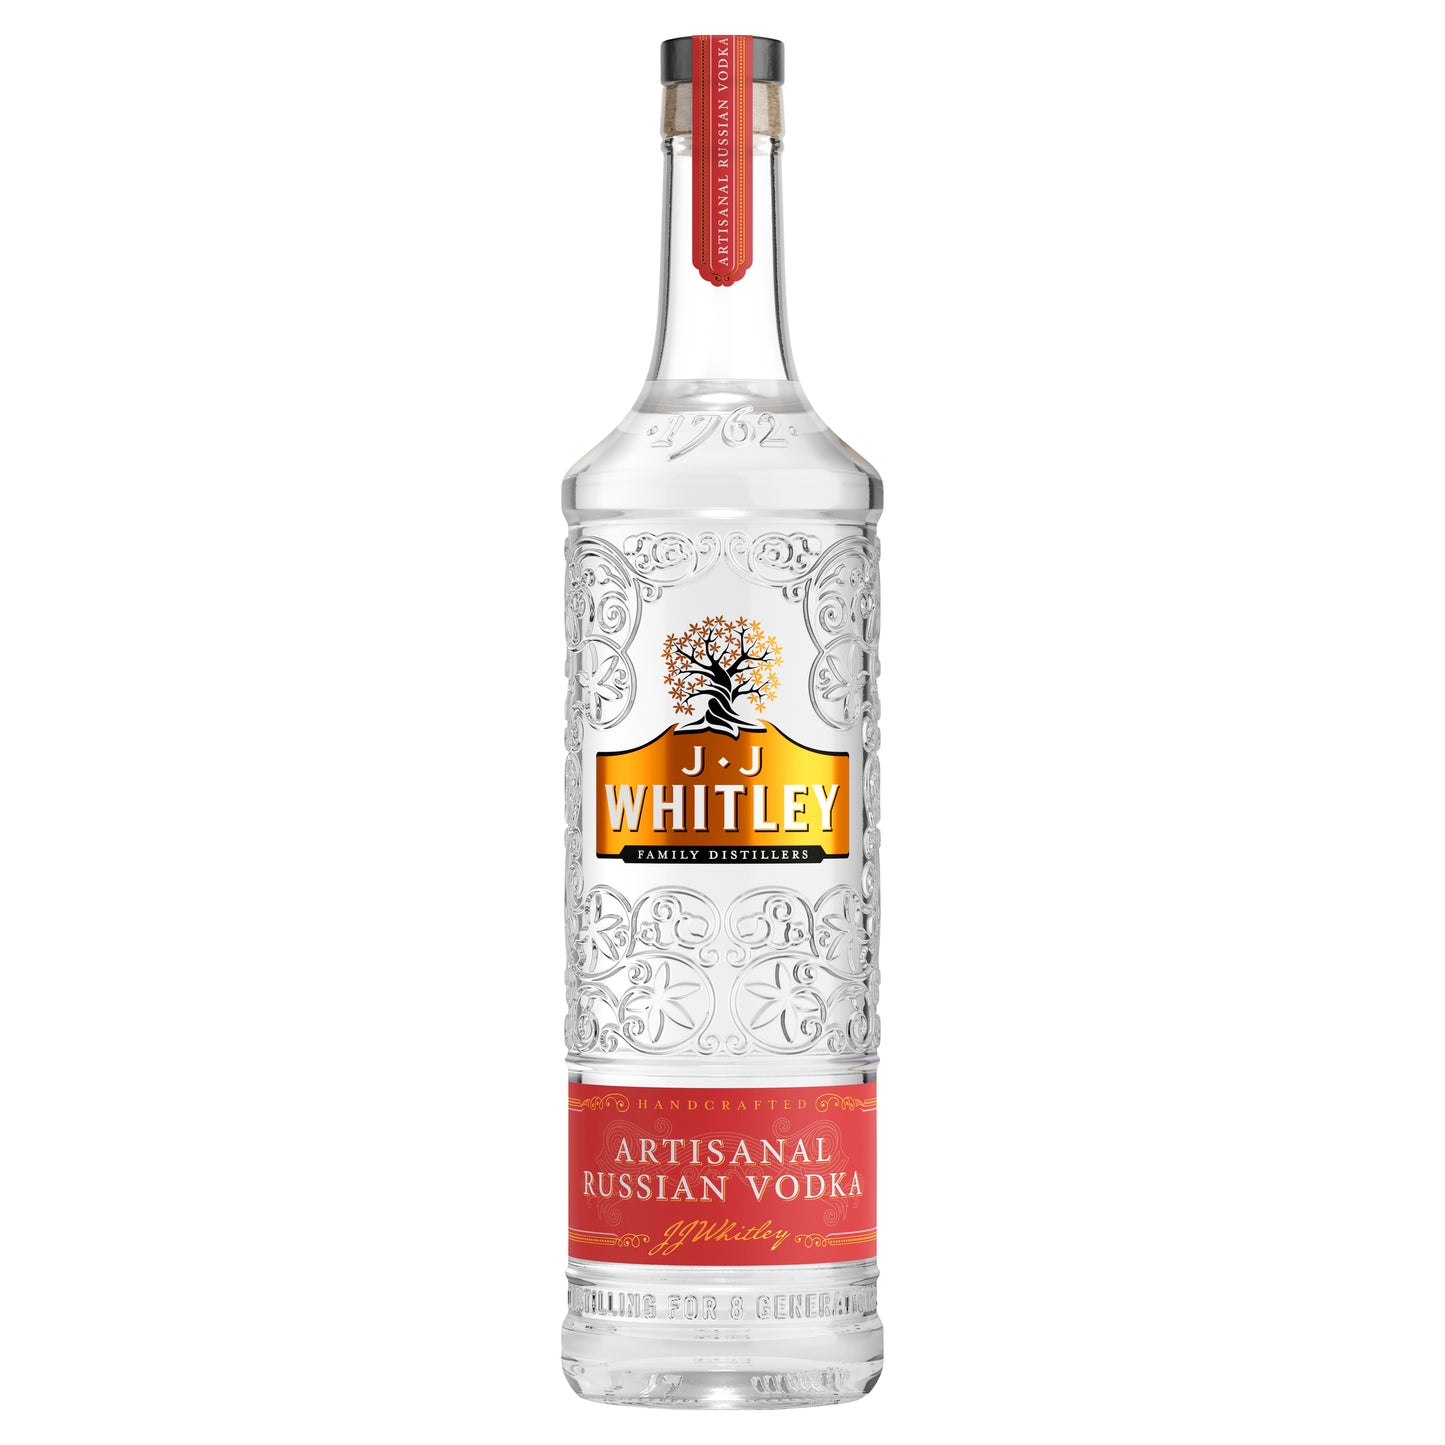 JJ Whitley Artisanal Russian Vodka 700ml